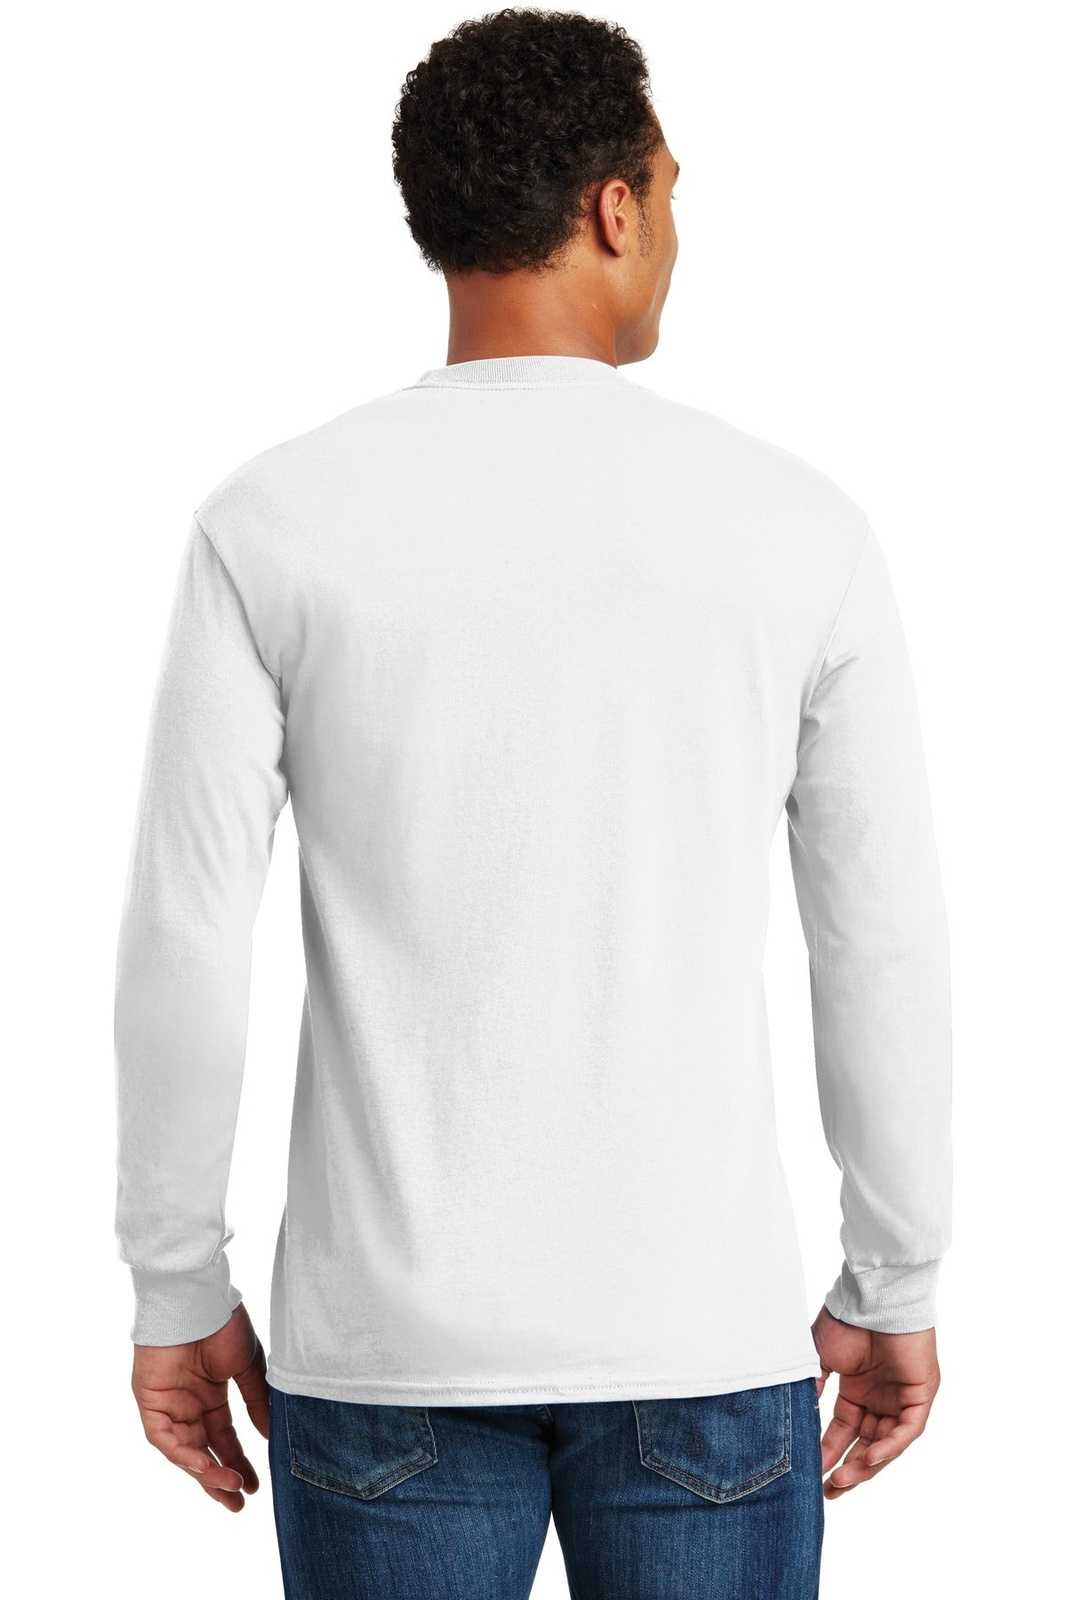 violinist garage guiden Gildan 5400 Heavy Cotton 100% Cotton Long Sleeve T-Shirt - White